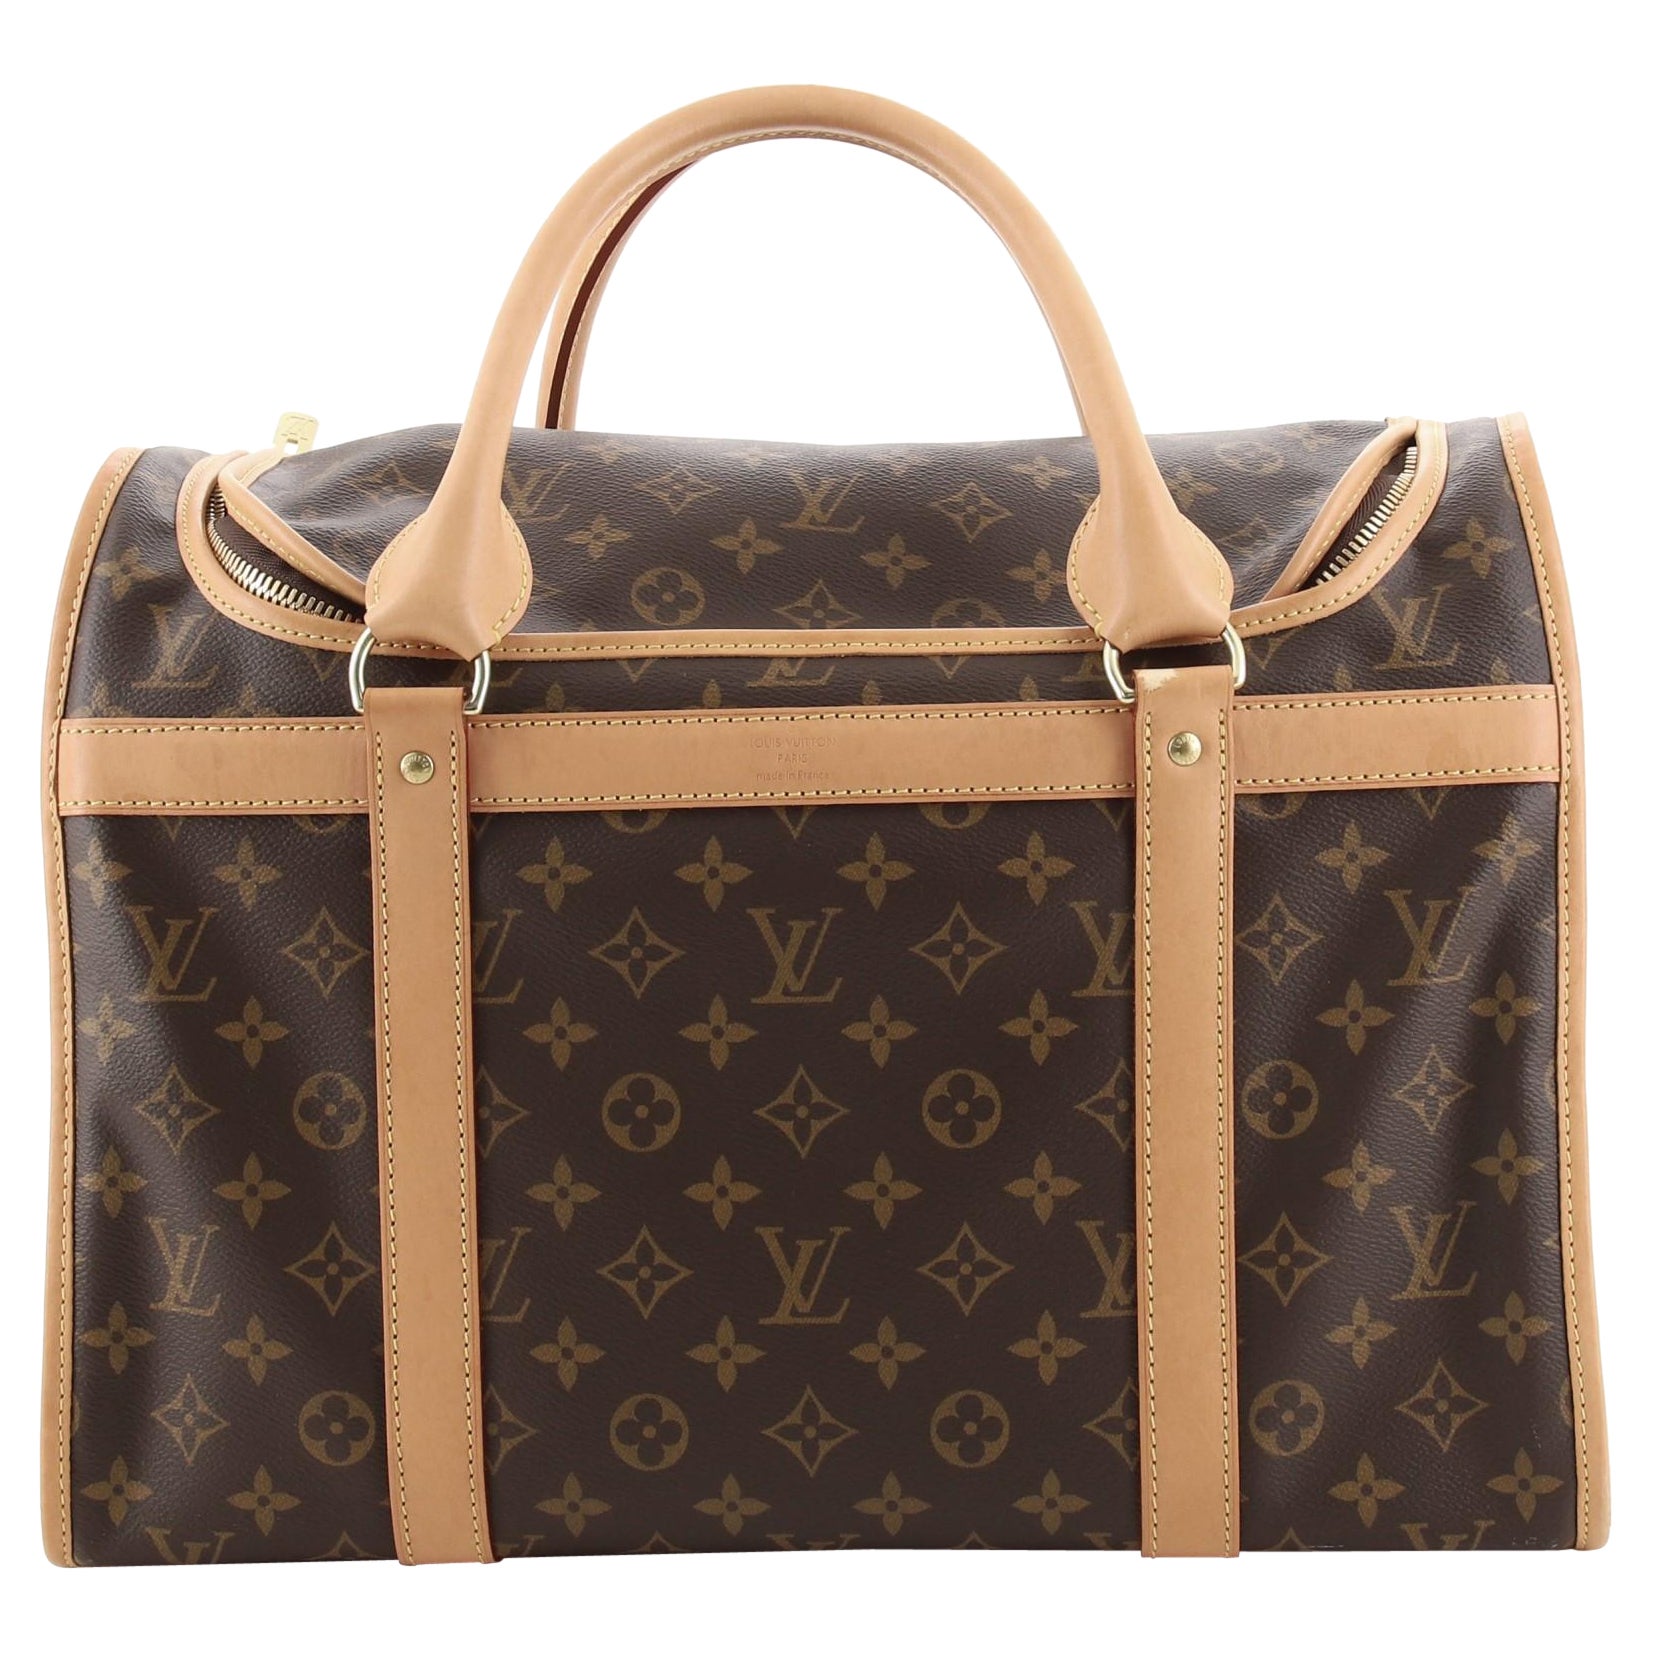 Louis Vuitton Dog Bag 40 - 5 For Sale on 1stDibs